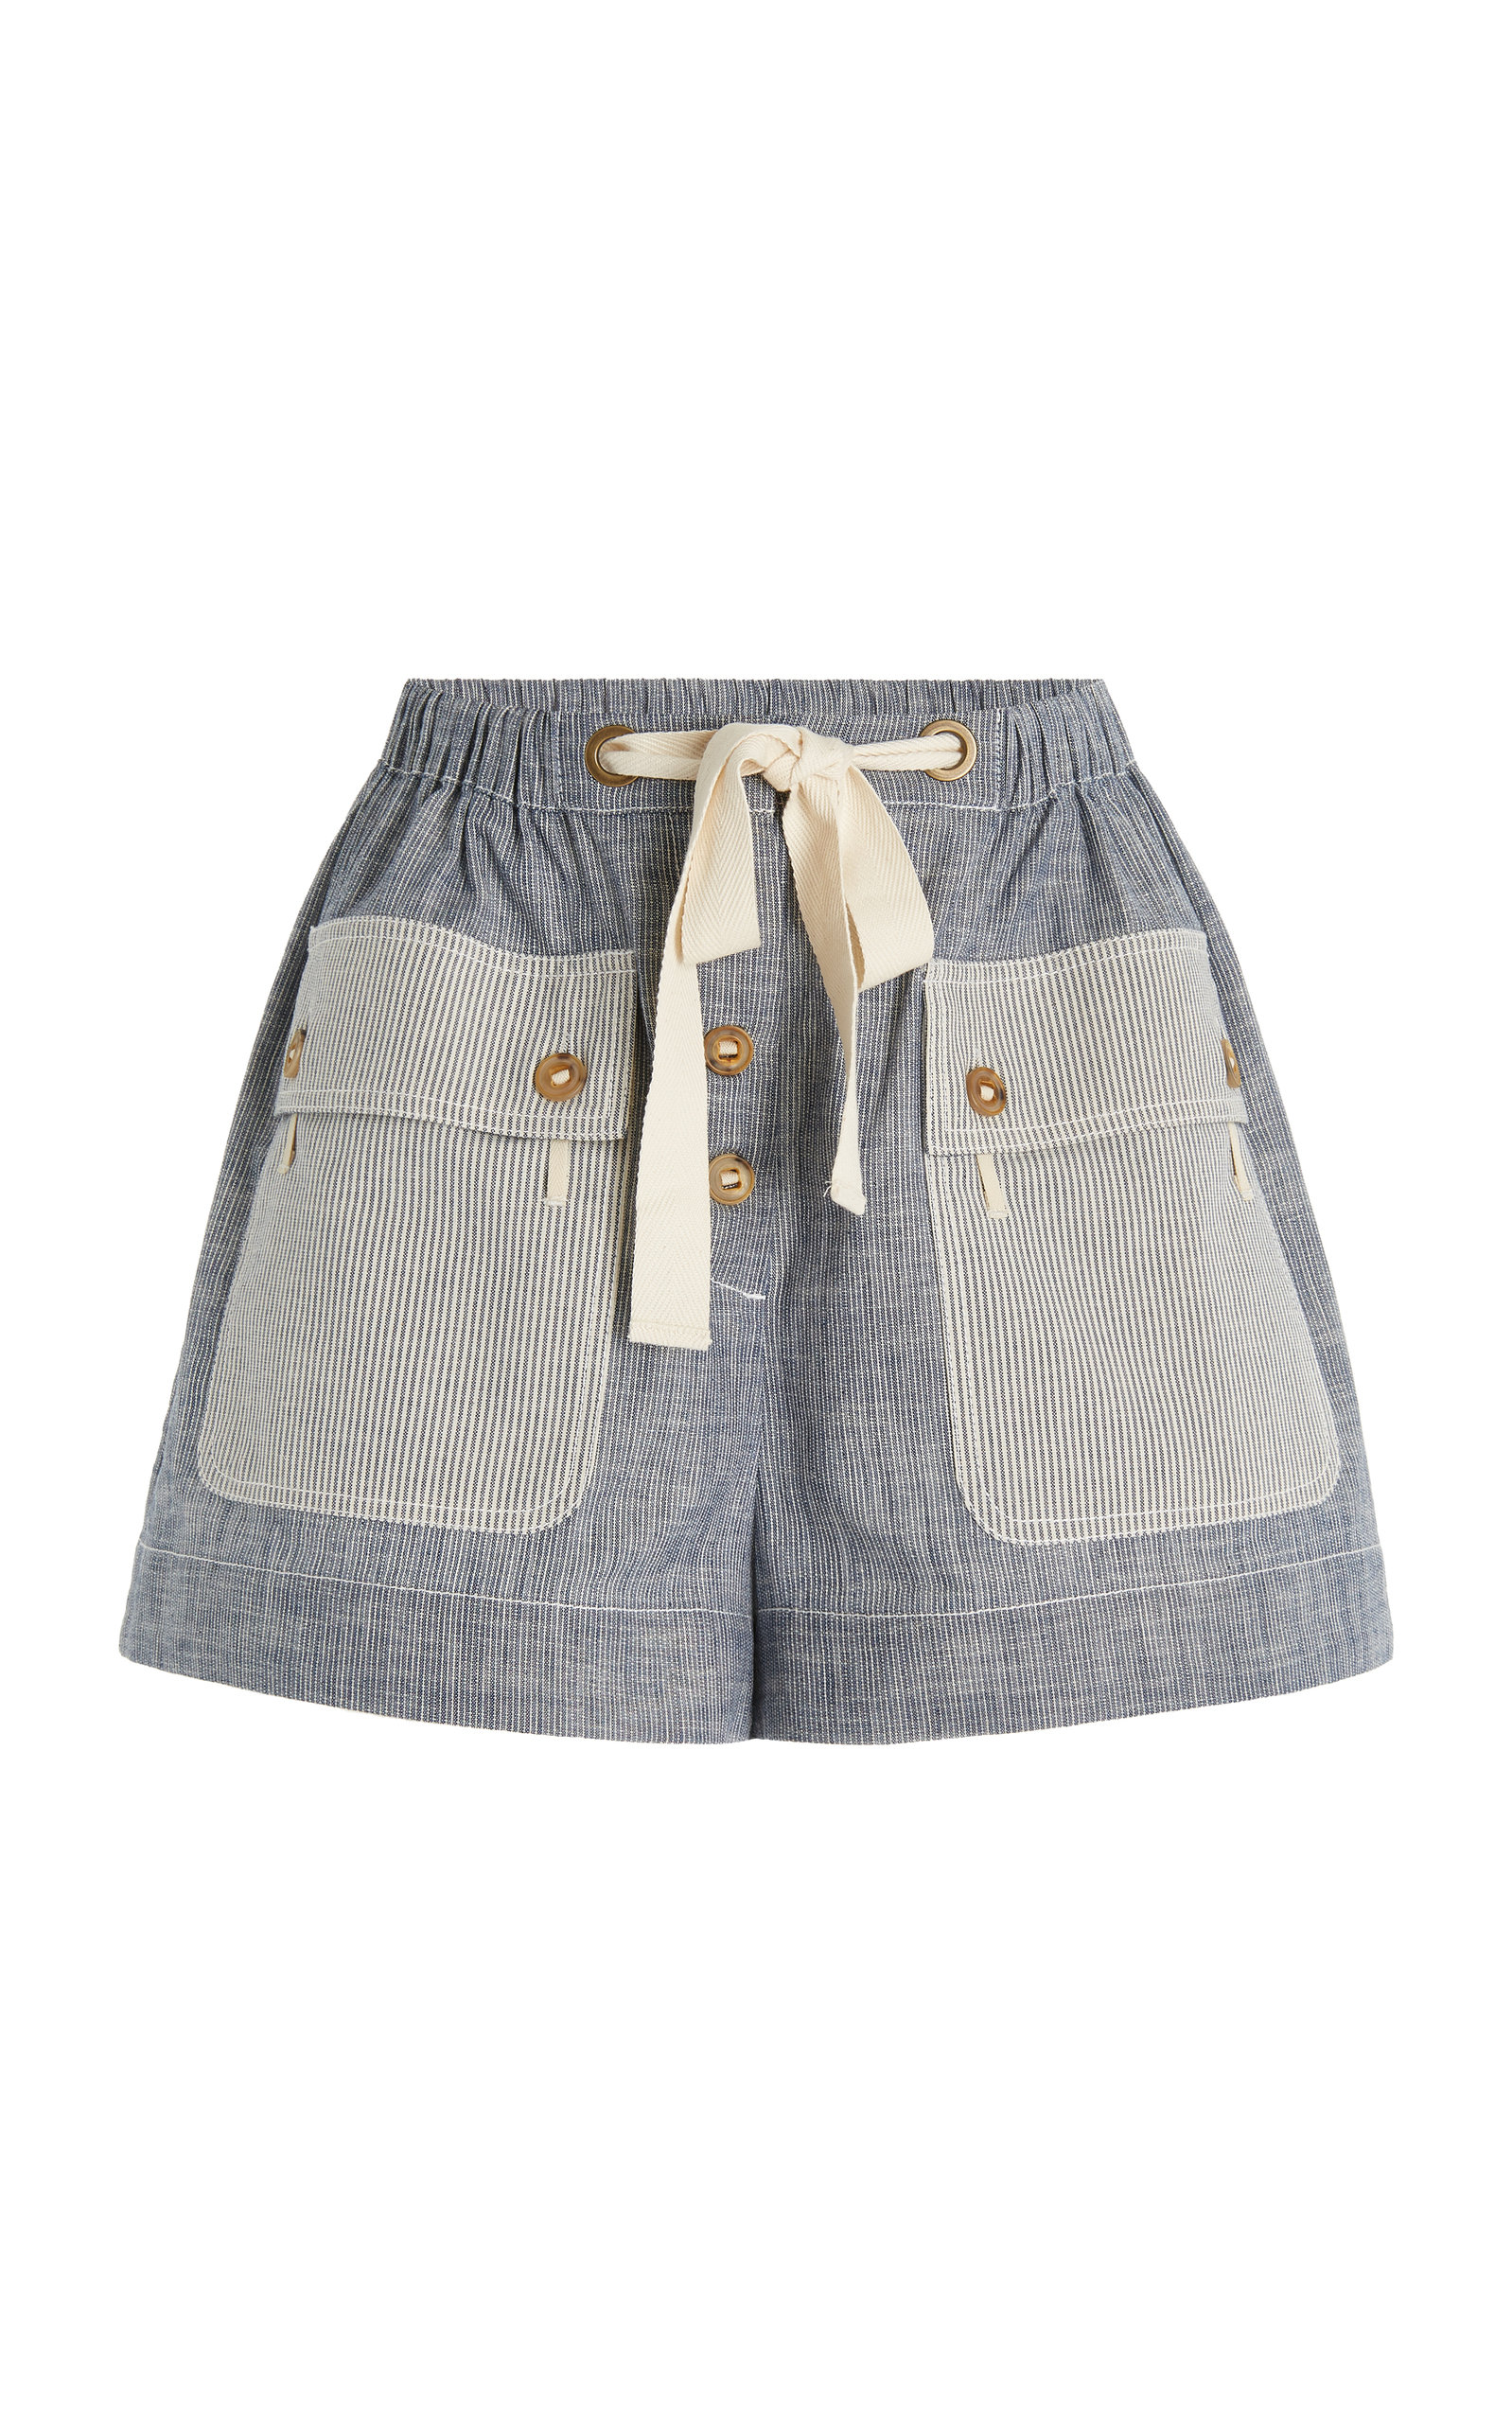 Ulla Johnson Women's Gracie Cotton Mini Shorts